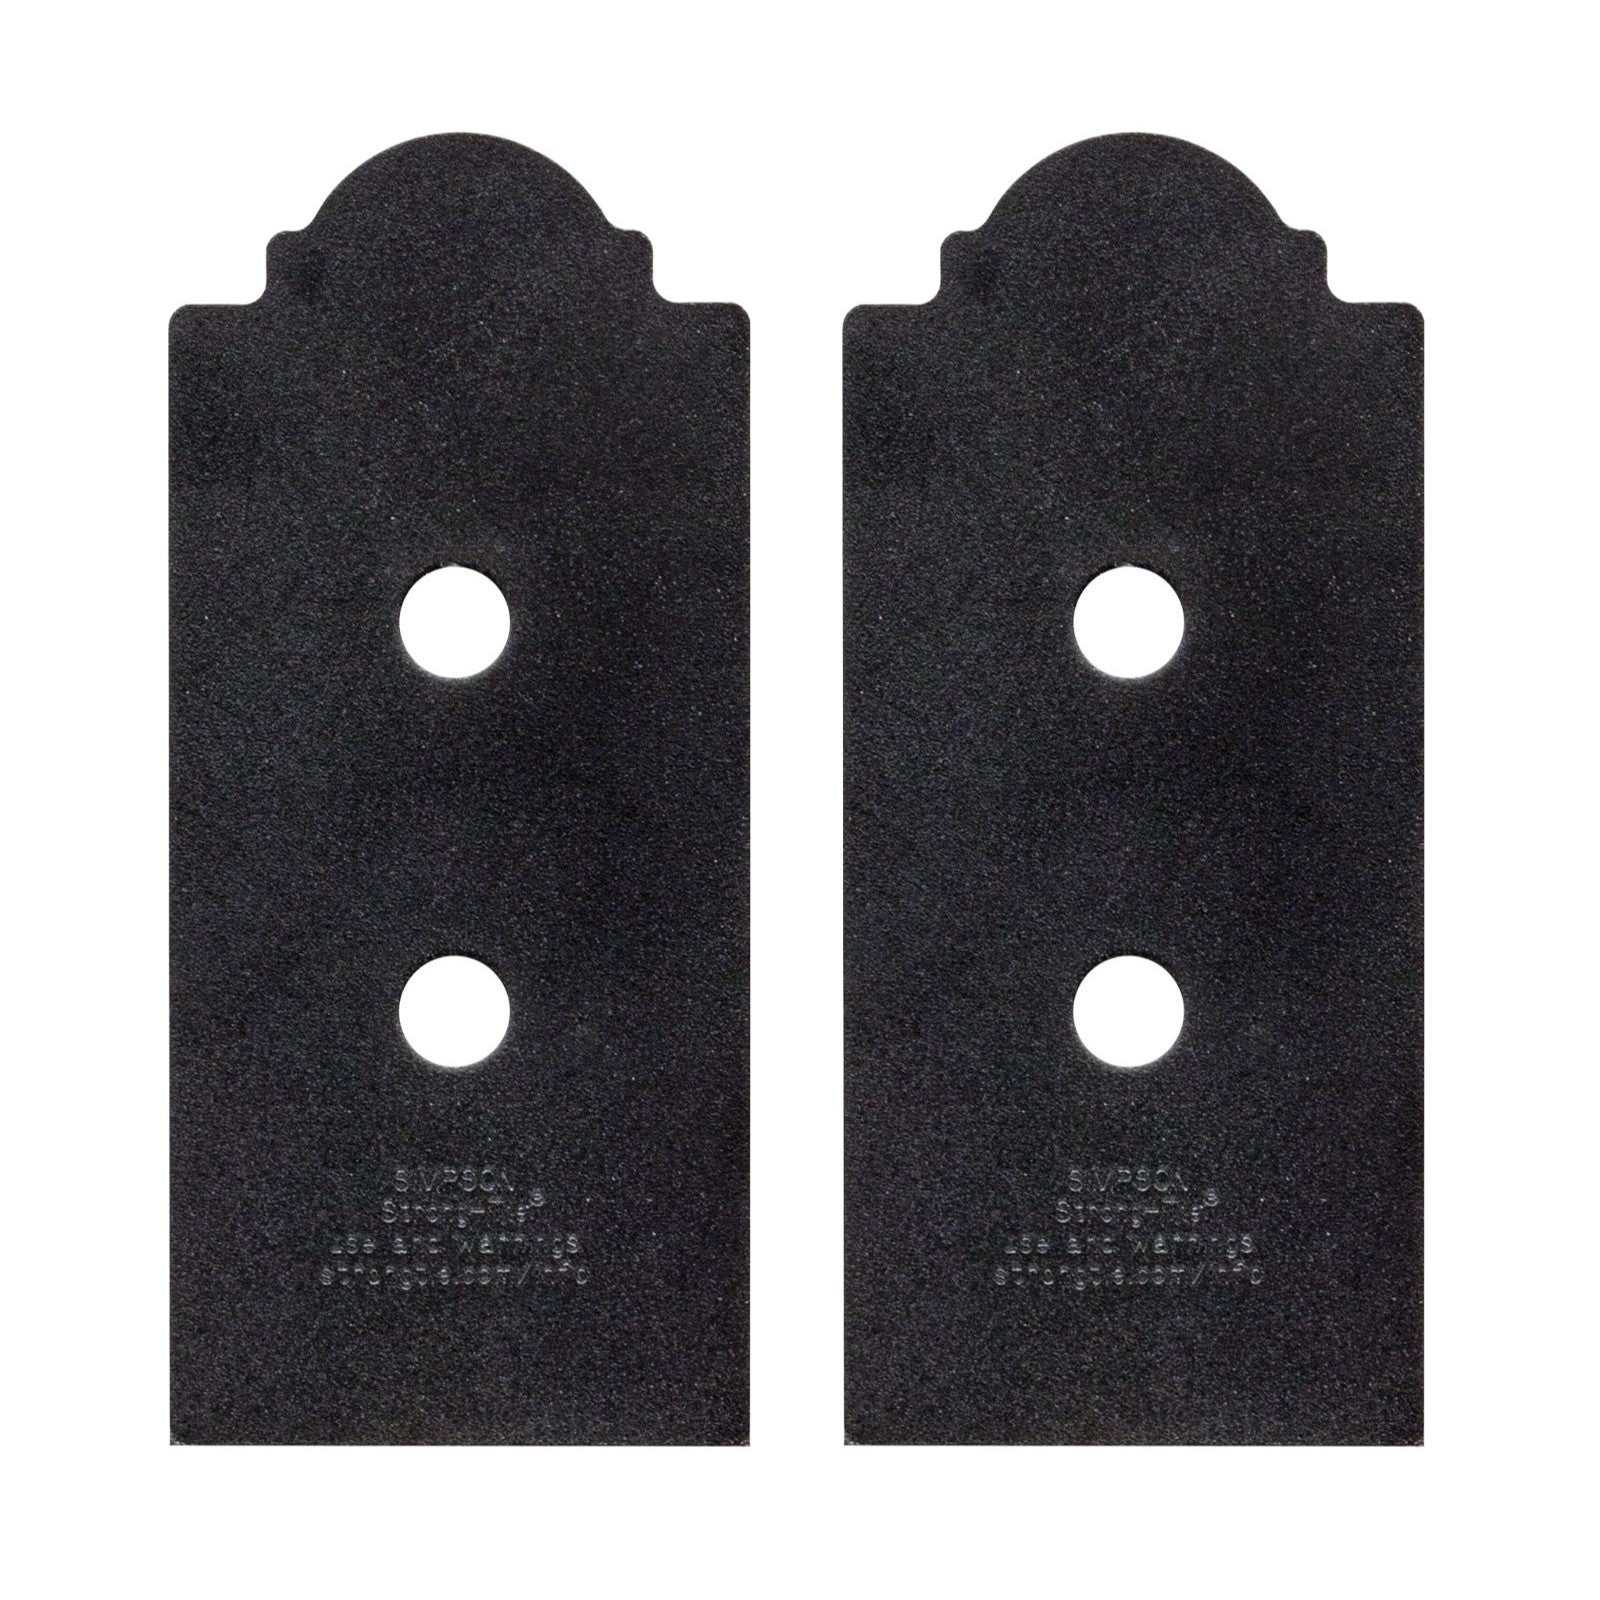 Simpson APB44DSP 4x4 Decorative Post Base Side Plate Black Powder Coat image 1 of 3